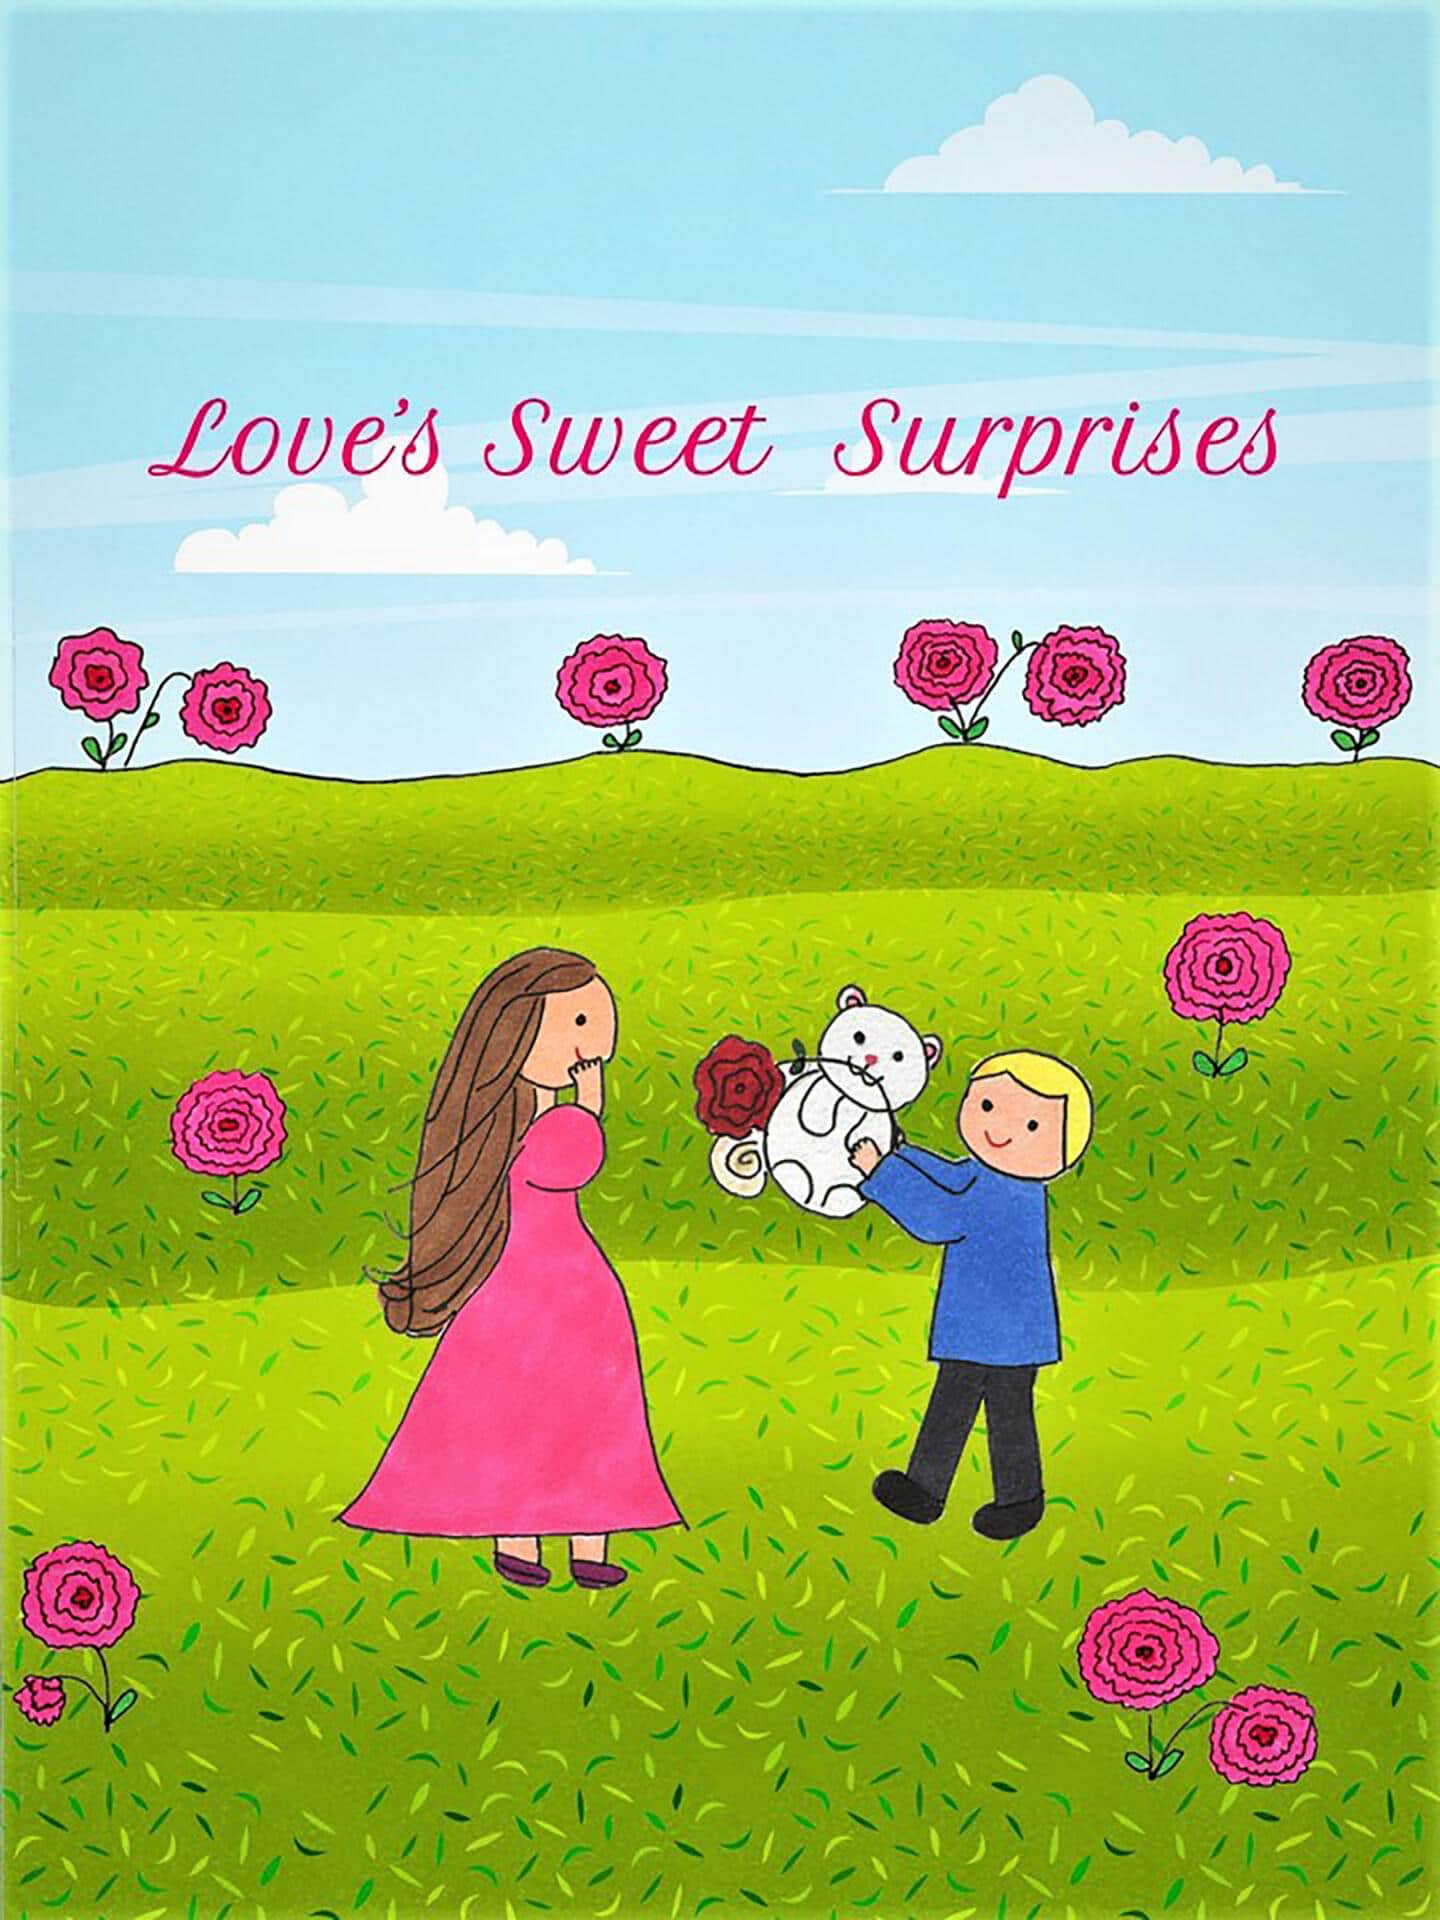 Love’s Sweet Surprises eCard